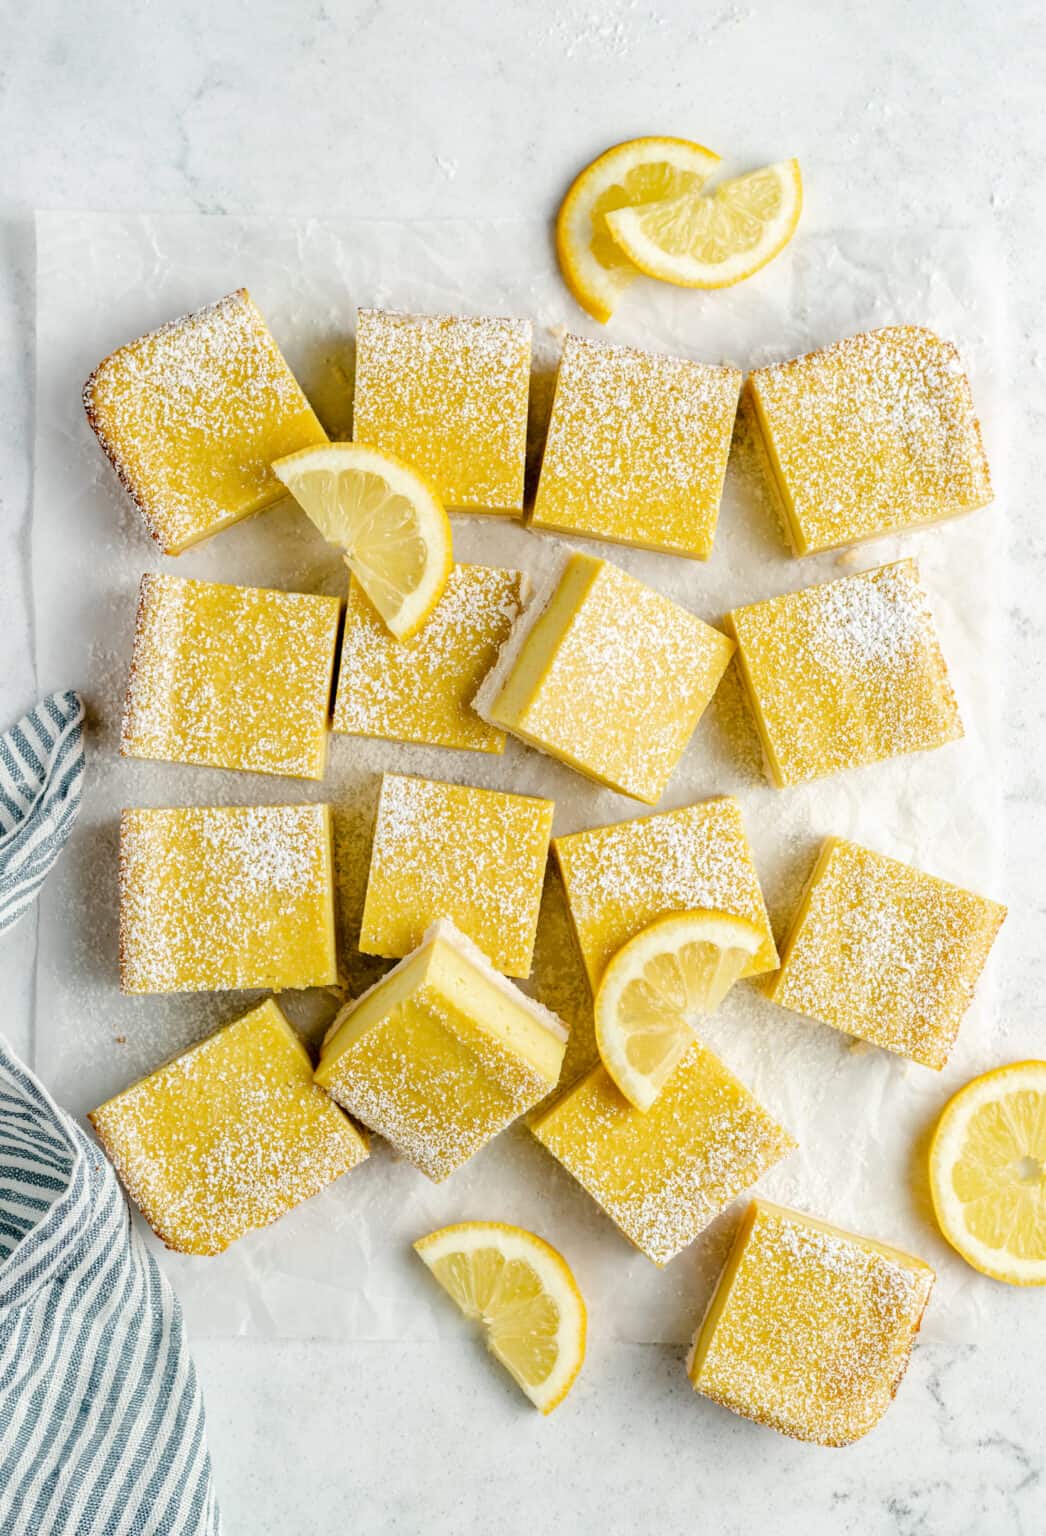 Easy Vegan Lemon Bars Recipe | Jessica in the Kitchen